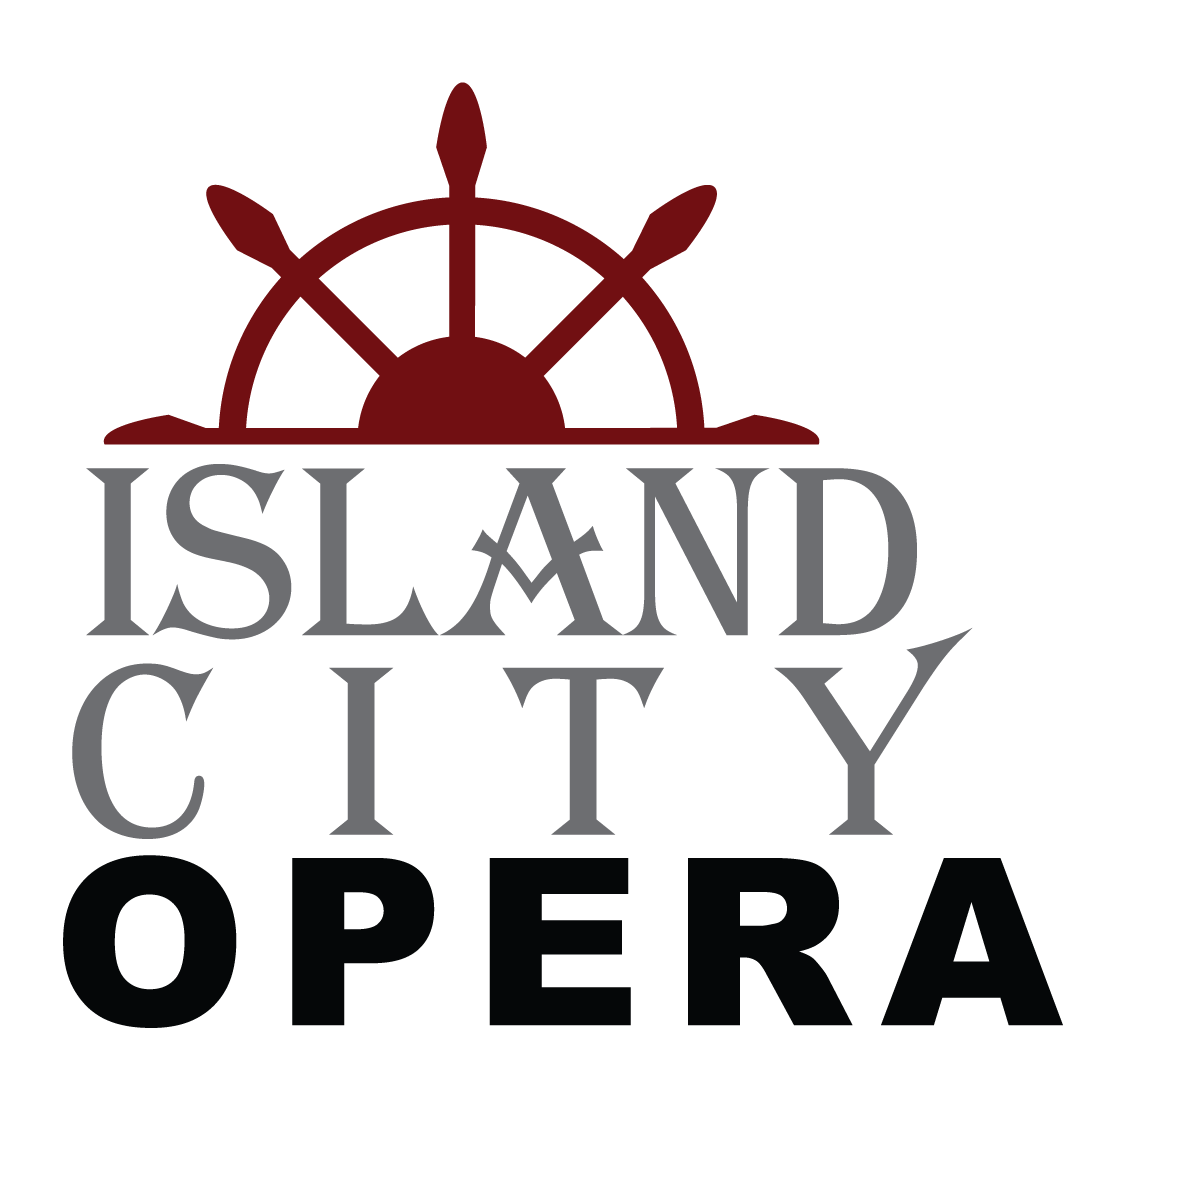 Shop Island City Opera Apparel